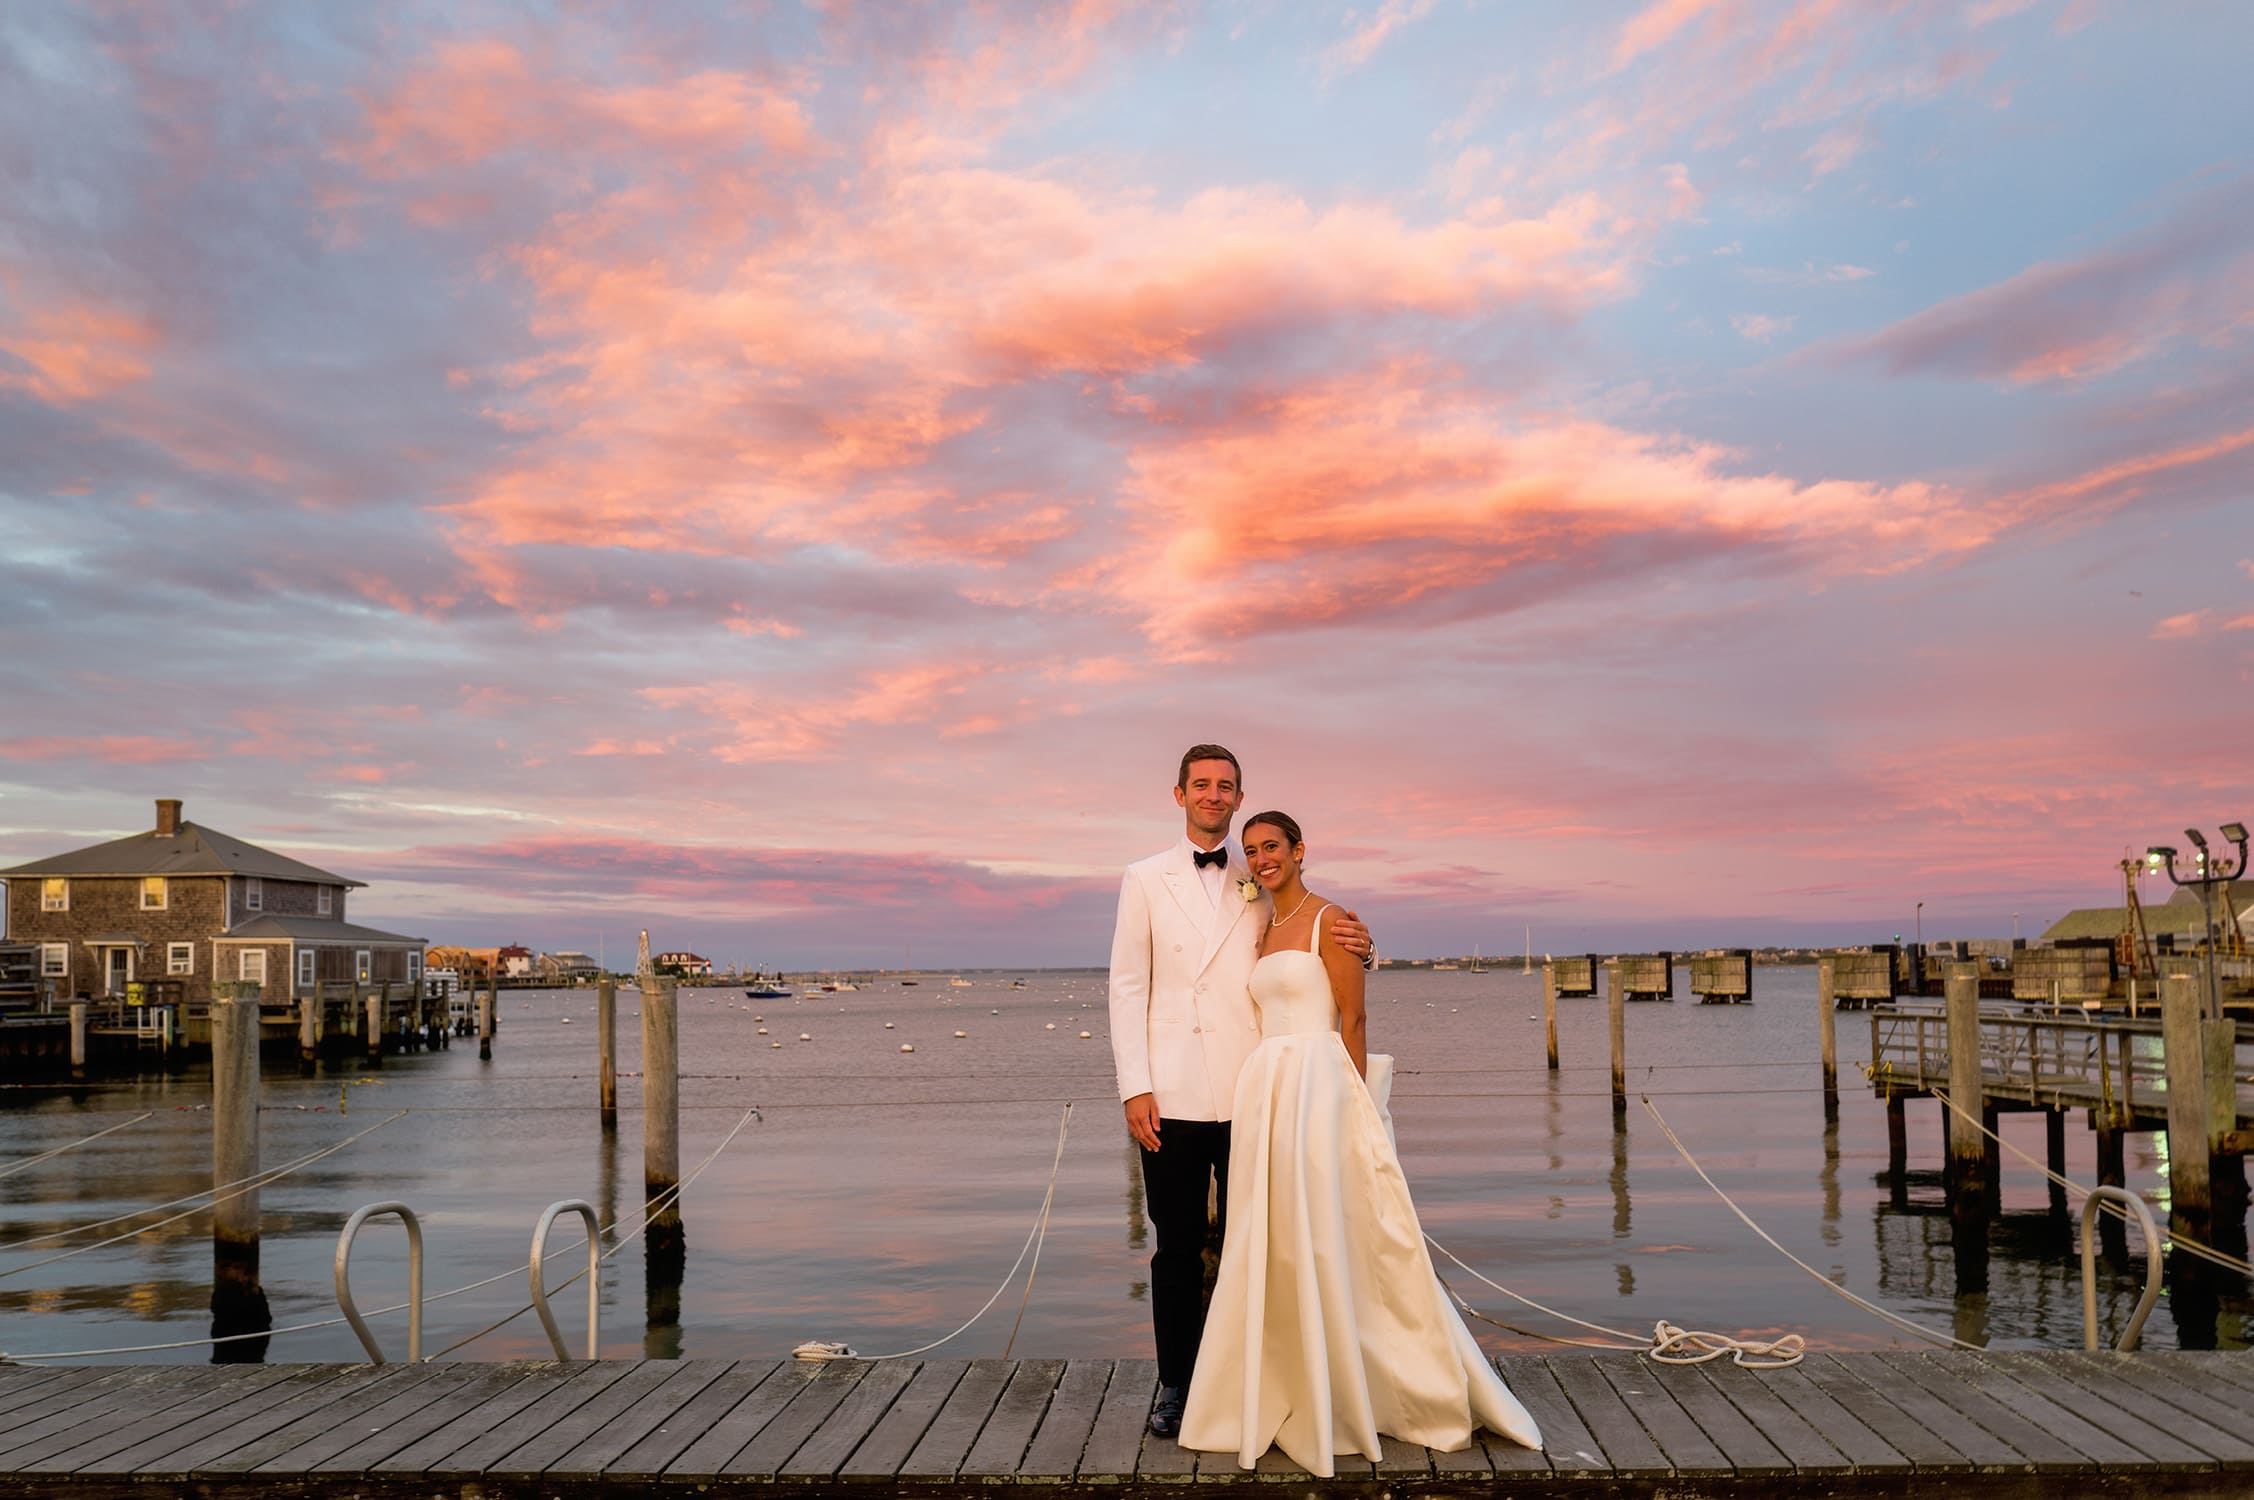 Nantucket Yacht Club Wedding Photos: Julie & Christian